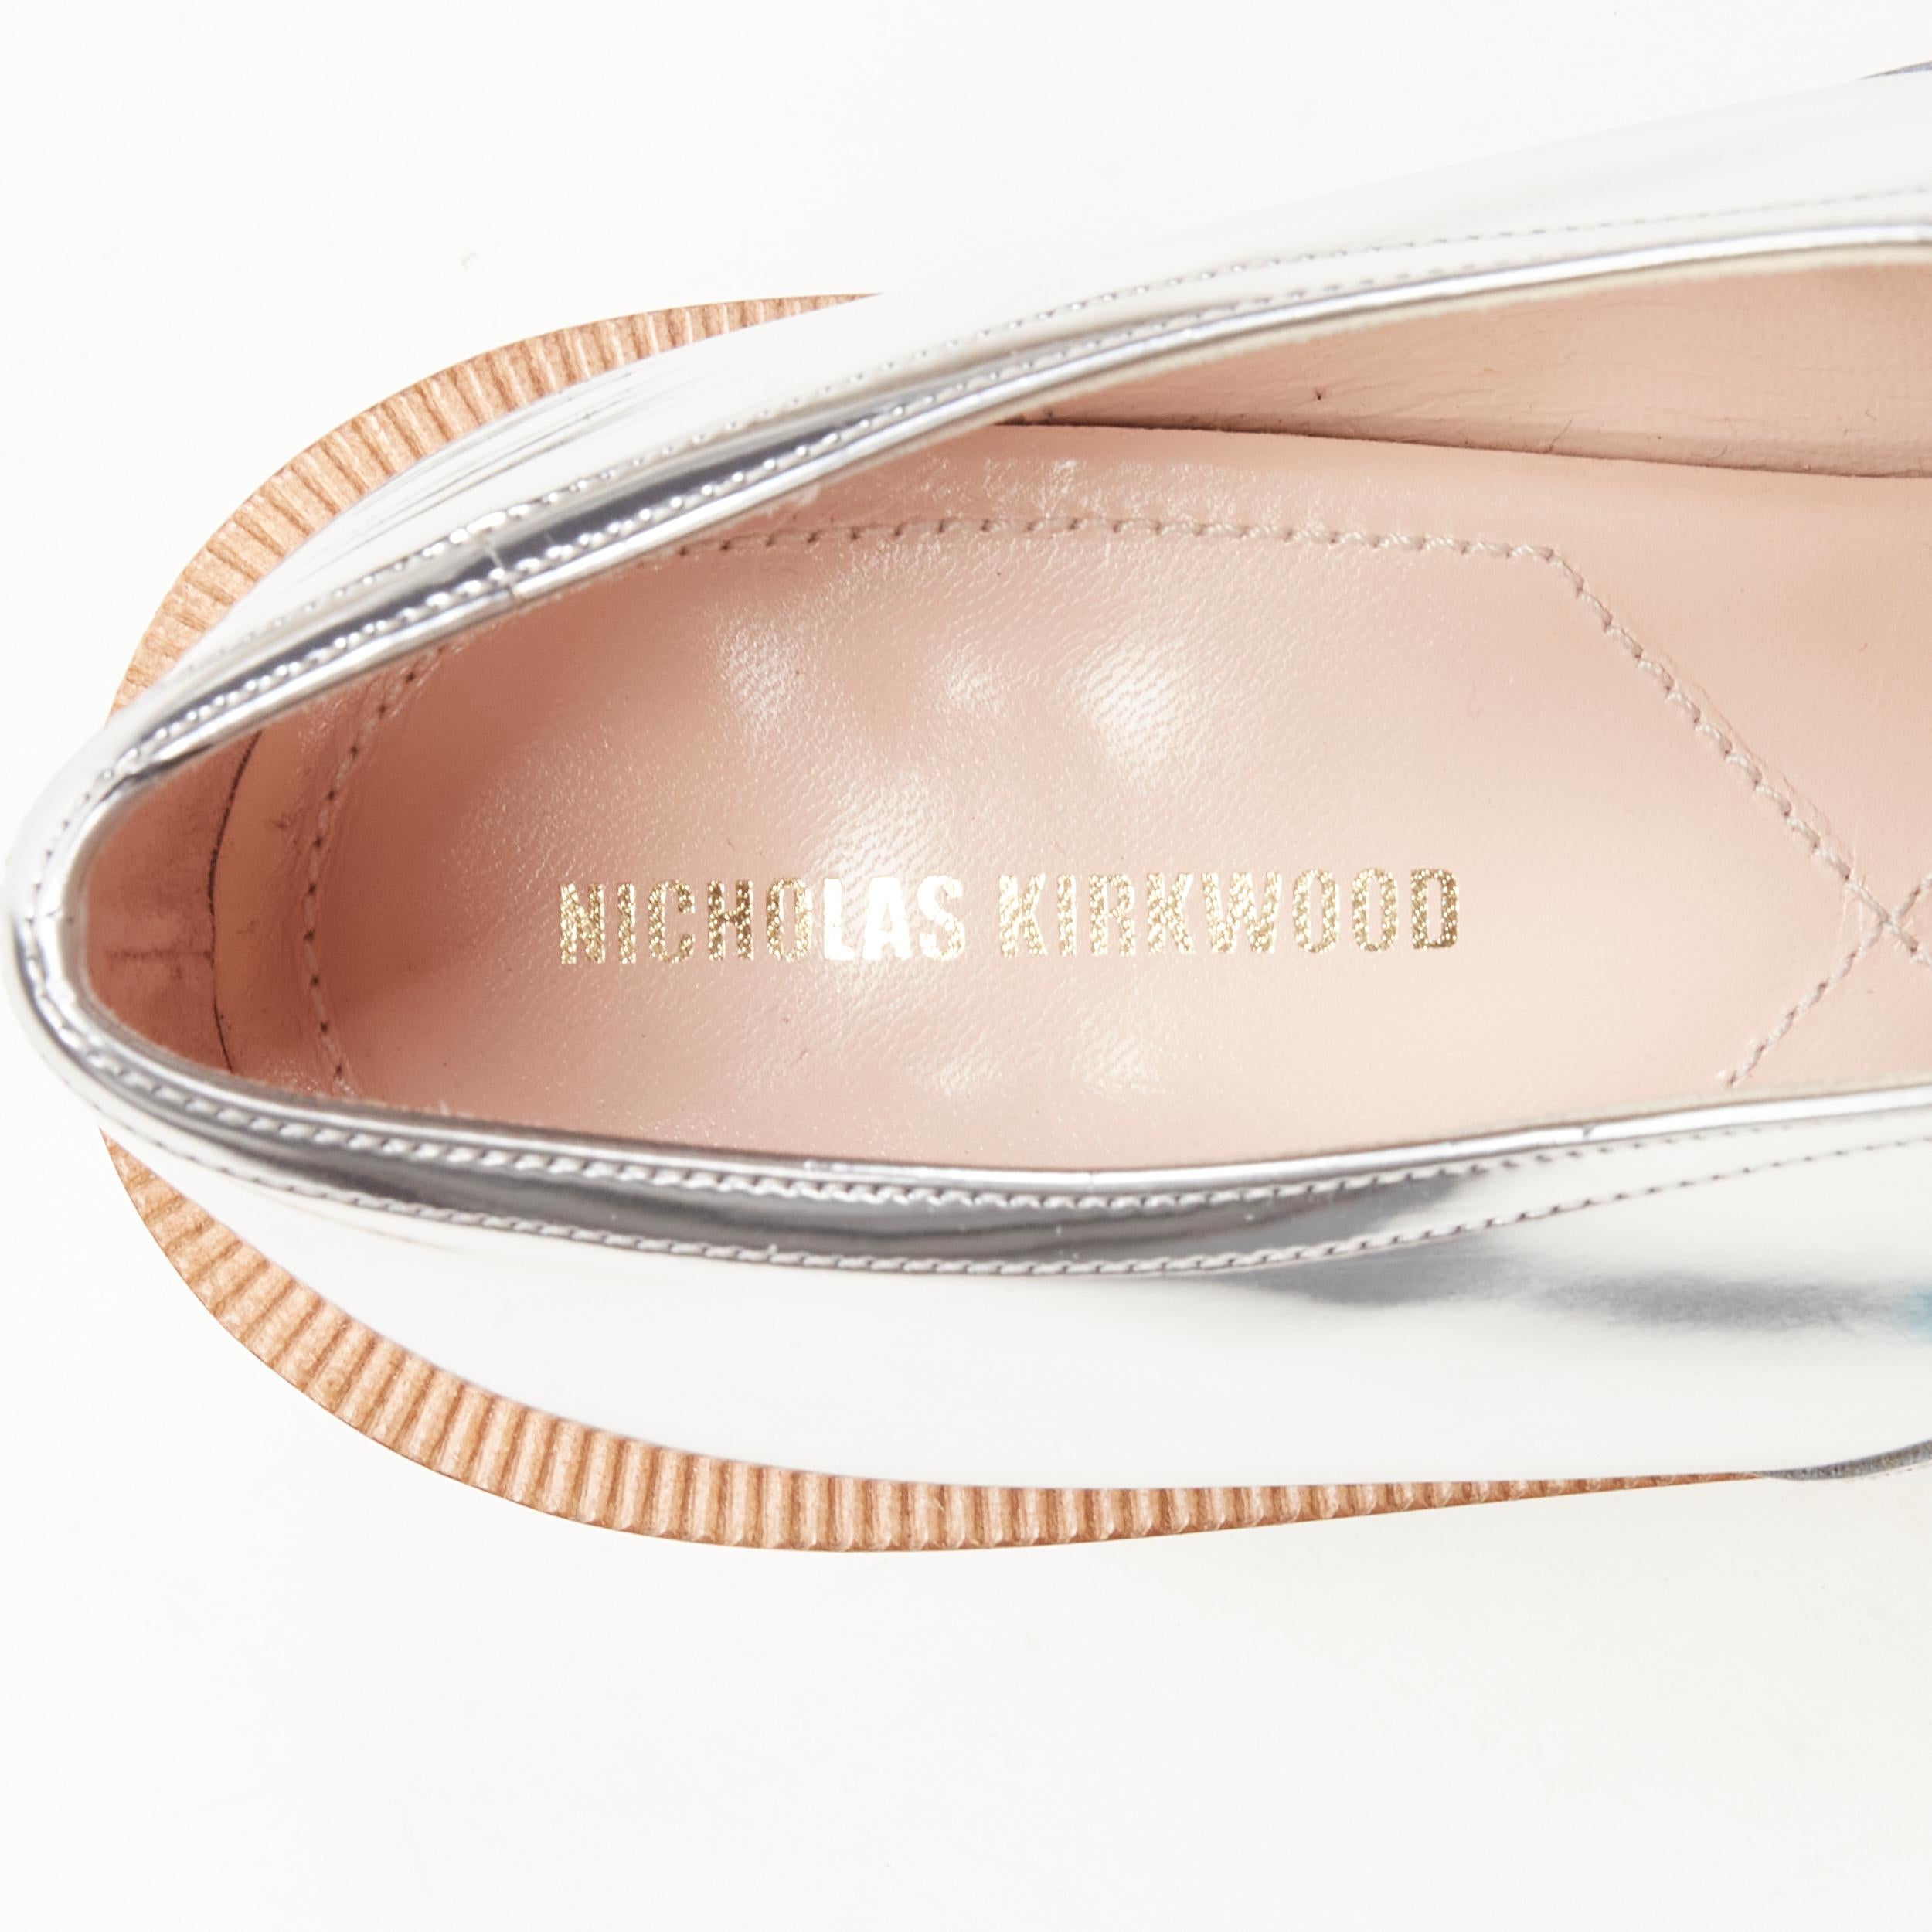 NICHOLAS KIRKWOOD metallic silver pearl embellished gold heel brogue loafer EU39 5